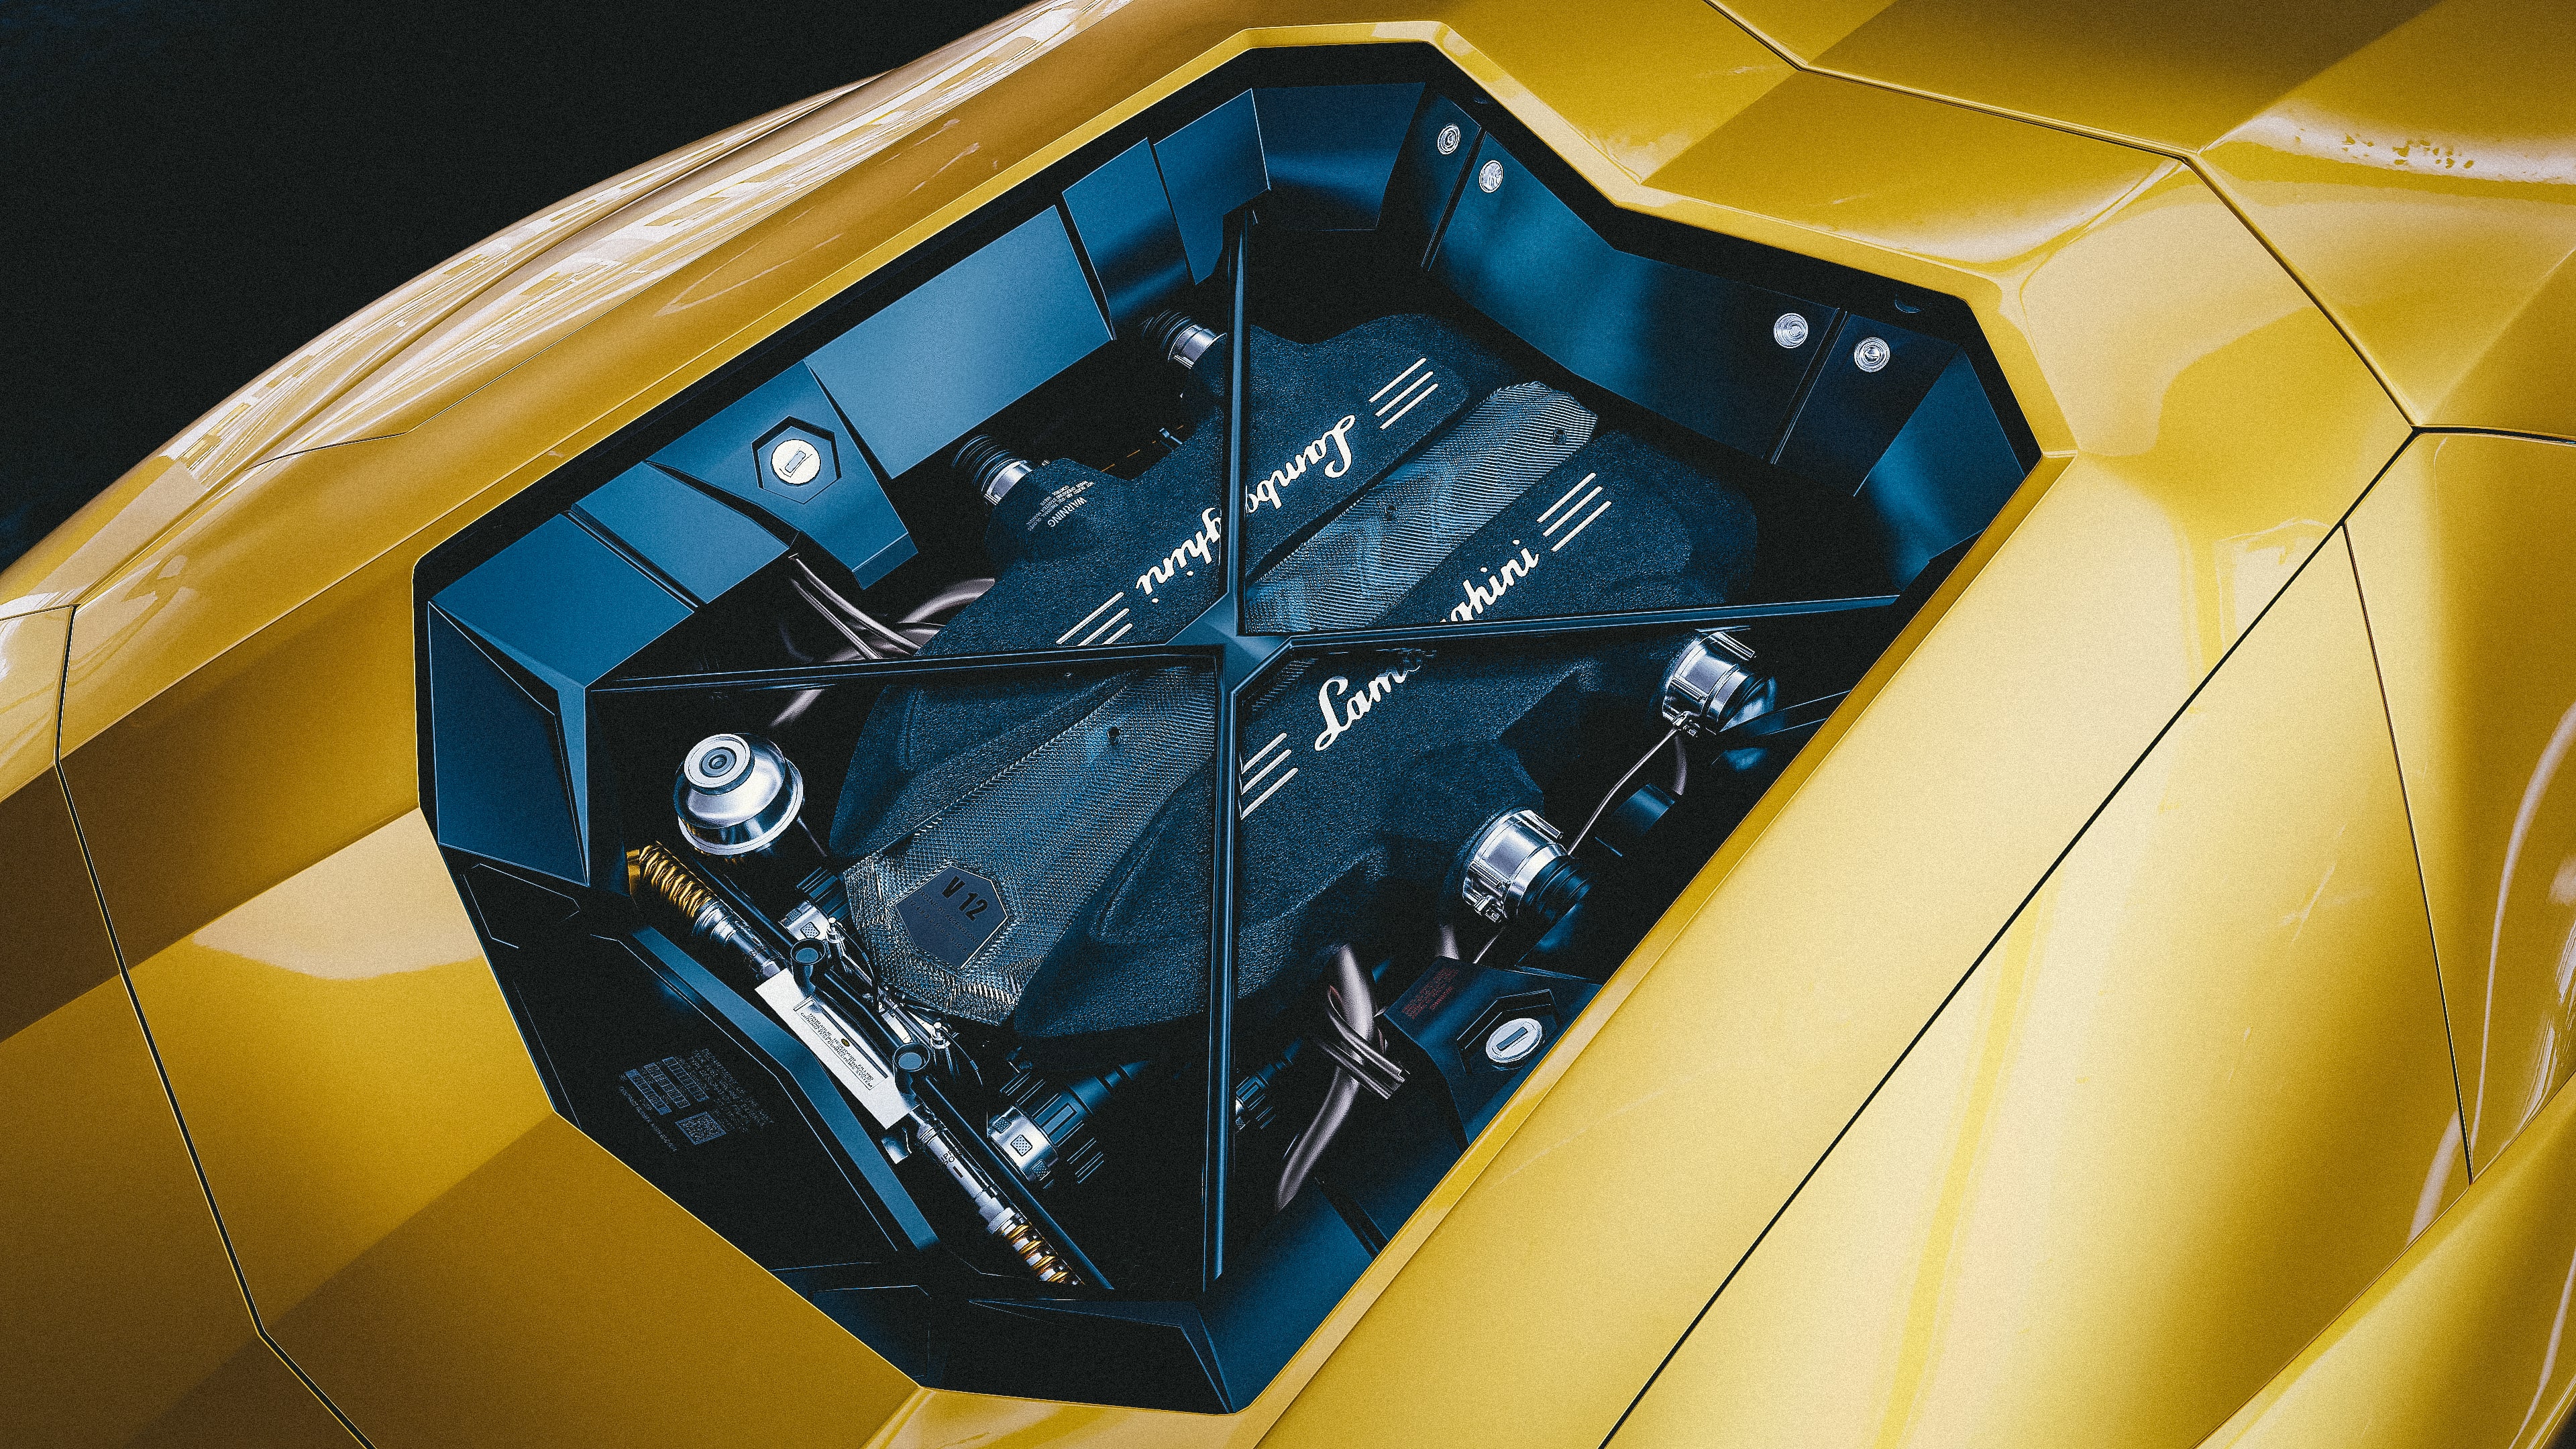 imagen de Lamborghini Aventador en Blender cycles render